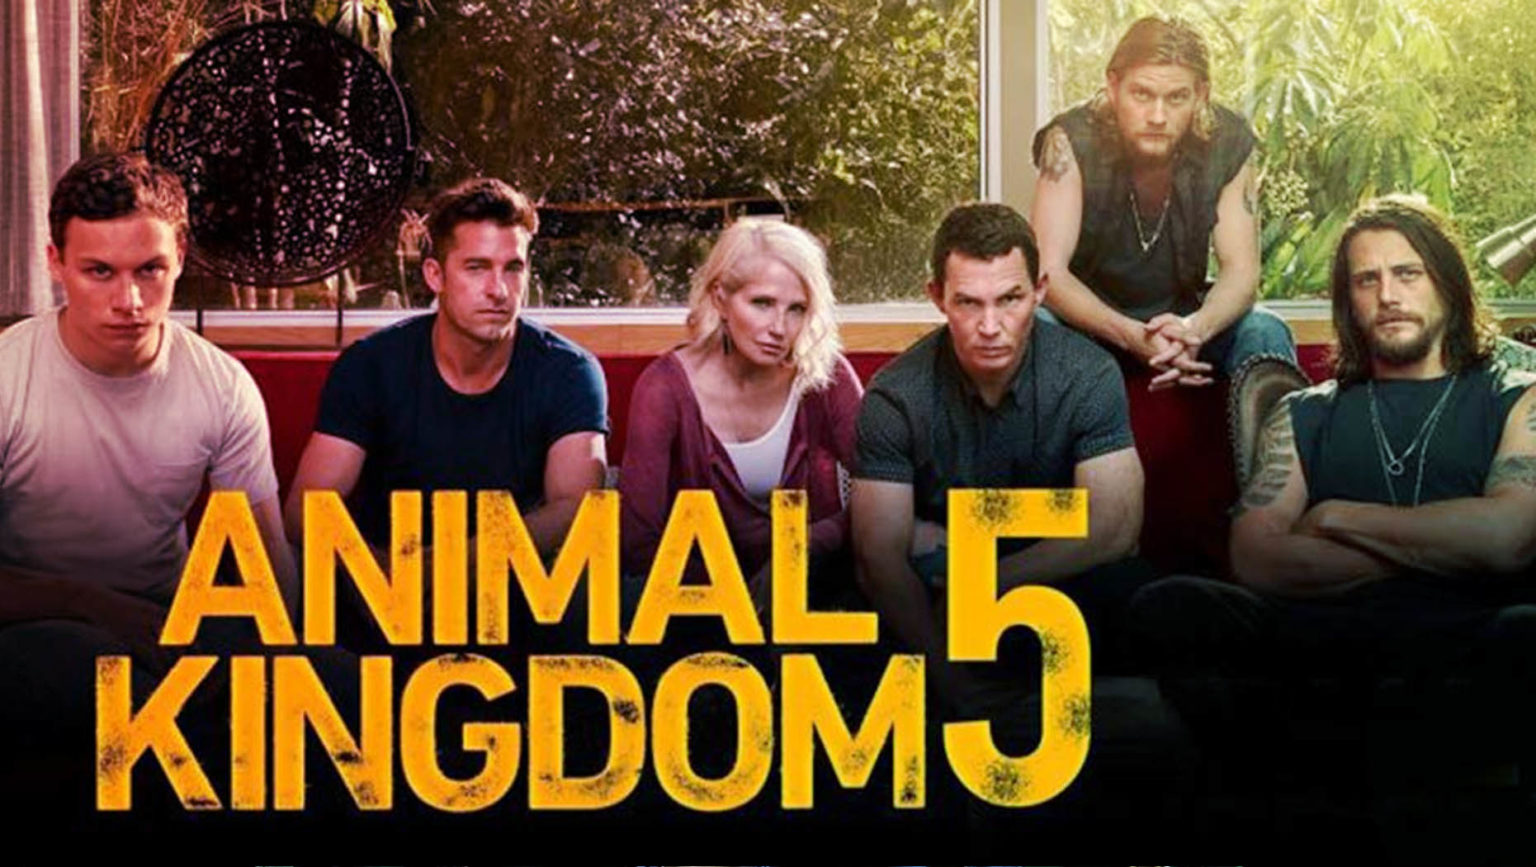 "Animal Kingdom" Season 1 To 5 Available On Netflix? | Where to Watch